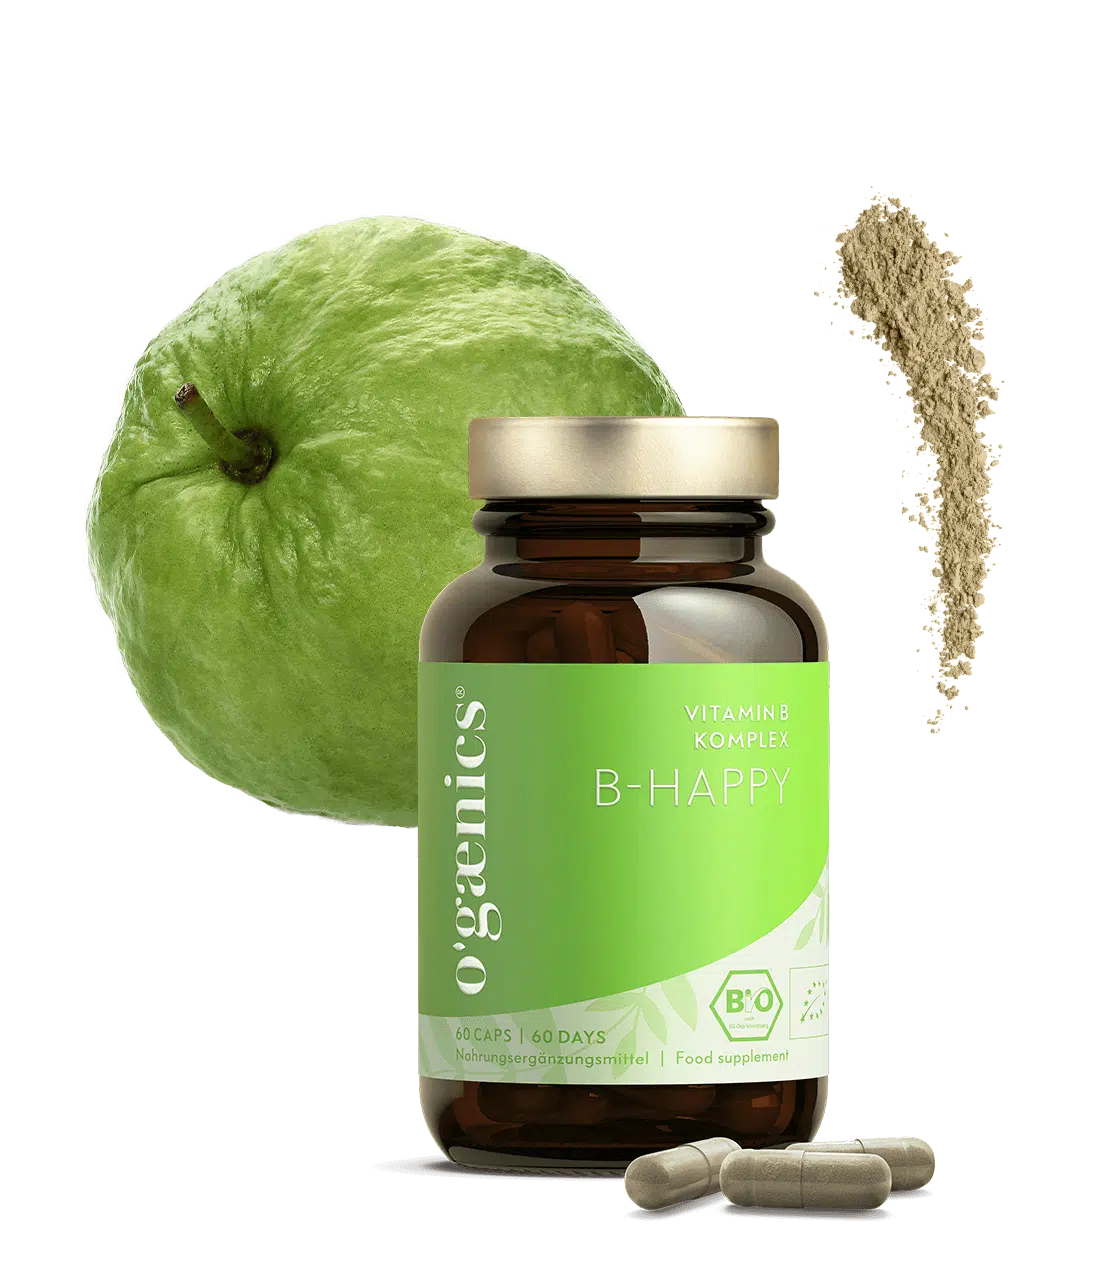 ogaenics-b-happy-vitaminb-komplex-energie-bio-nahrungsergaenzung-set-herzgesundheit